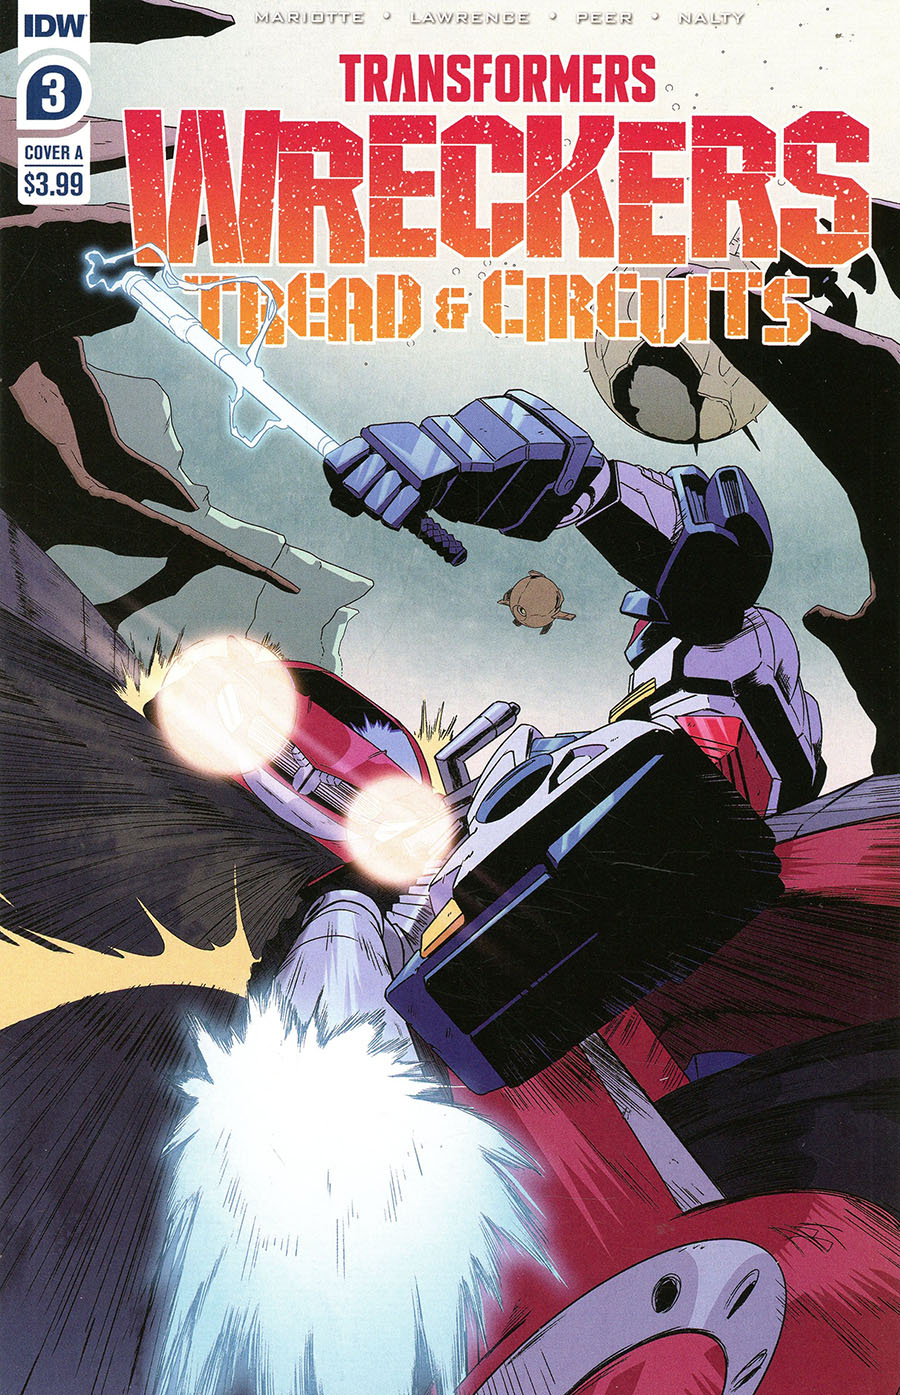 Transformers Wreckers Tread & Circuits #3 Cover A Regular Adam Bryce Thomas Cover